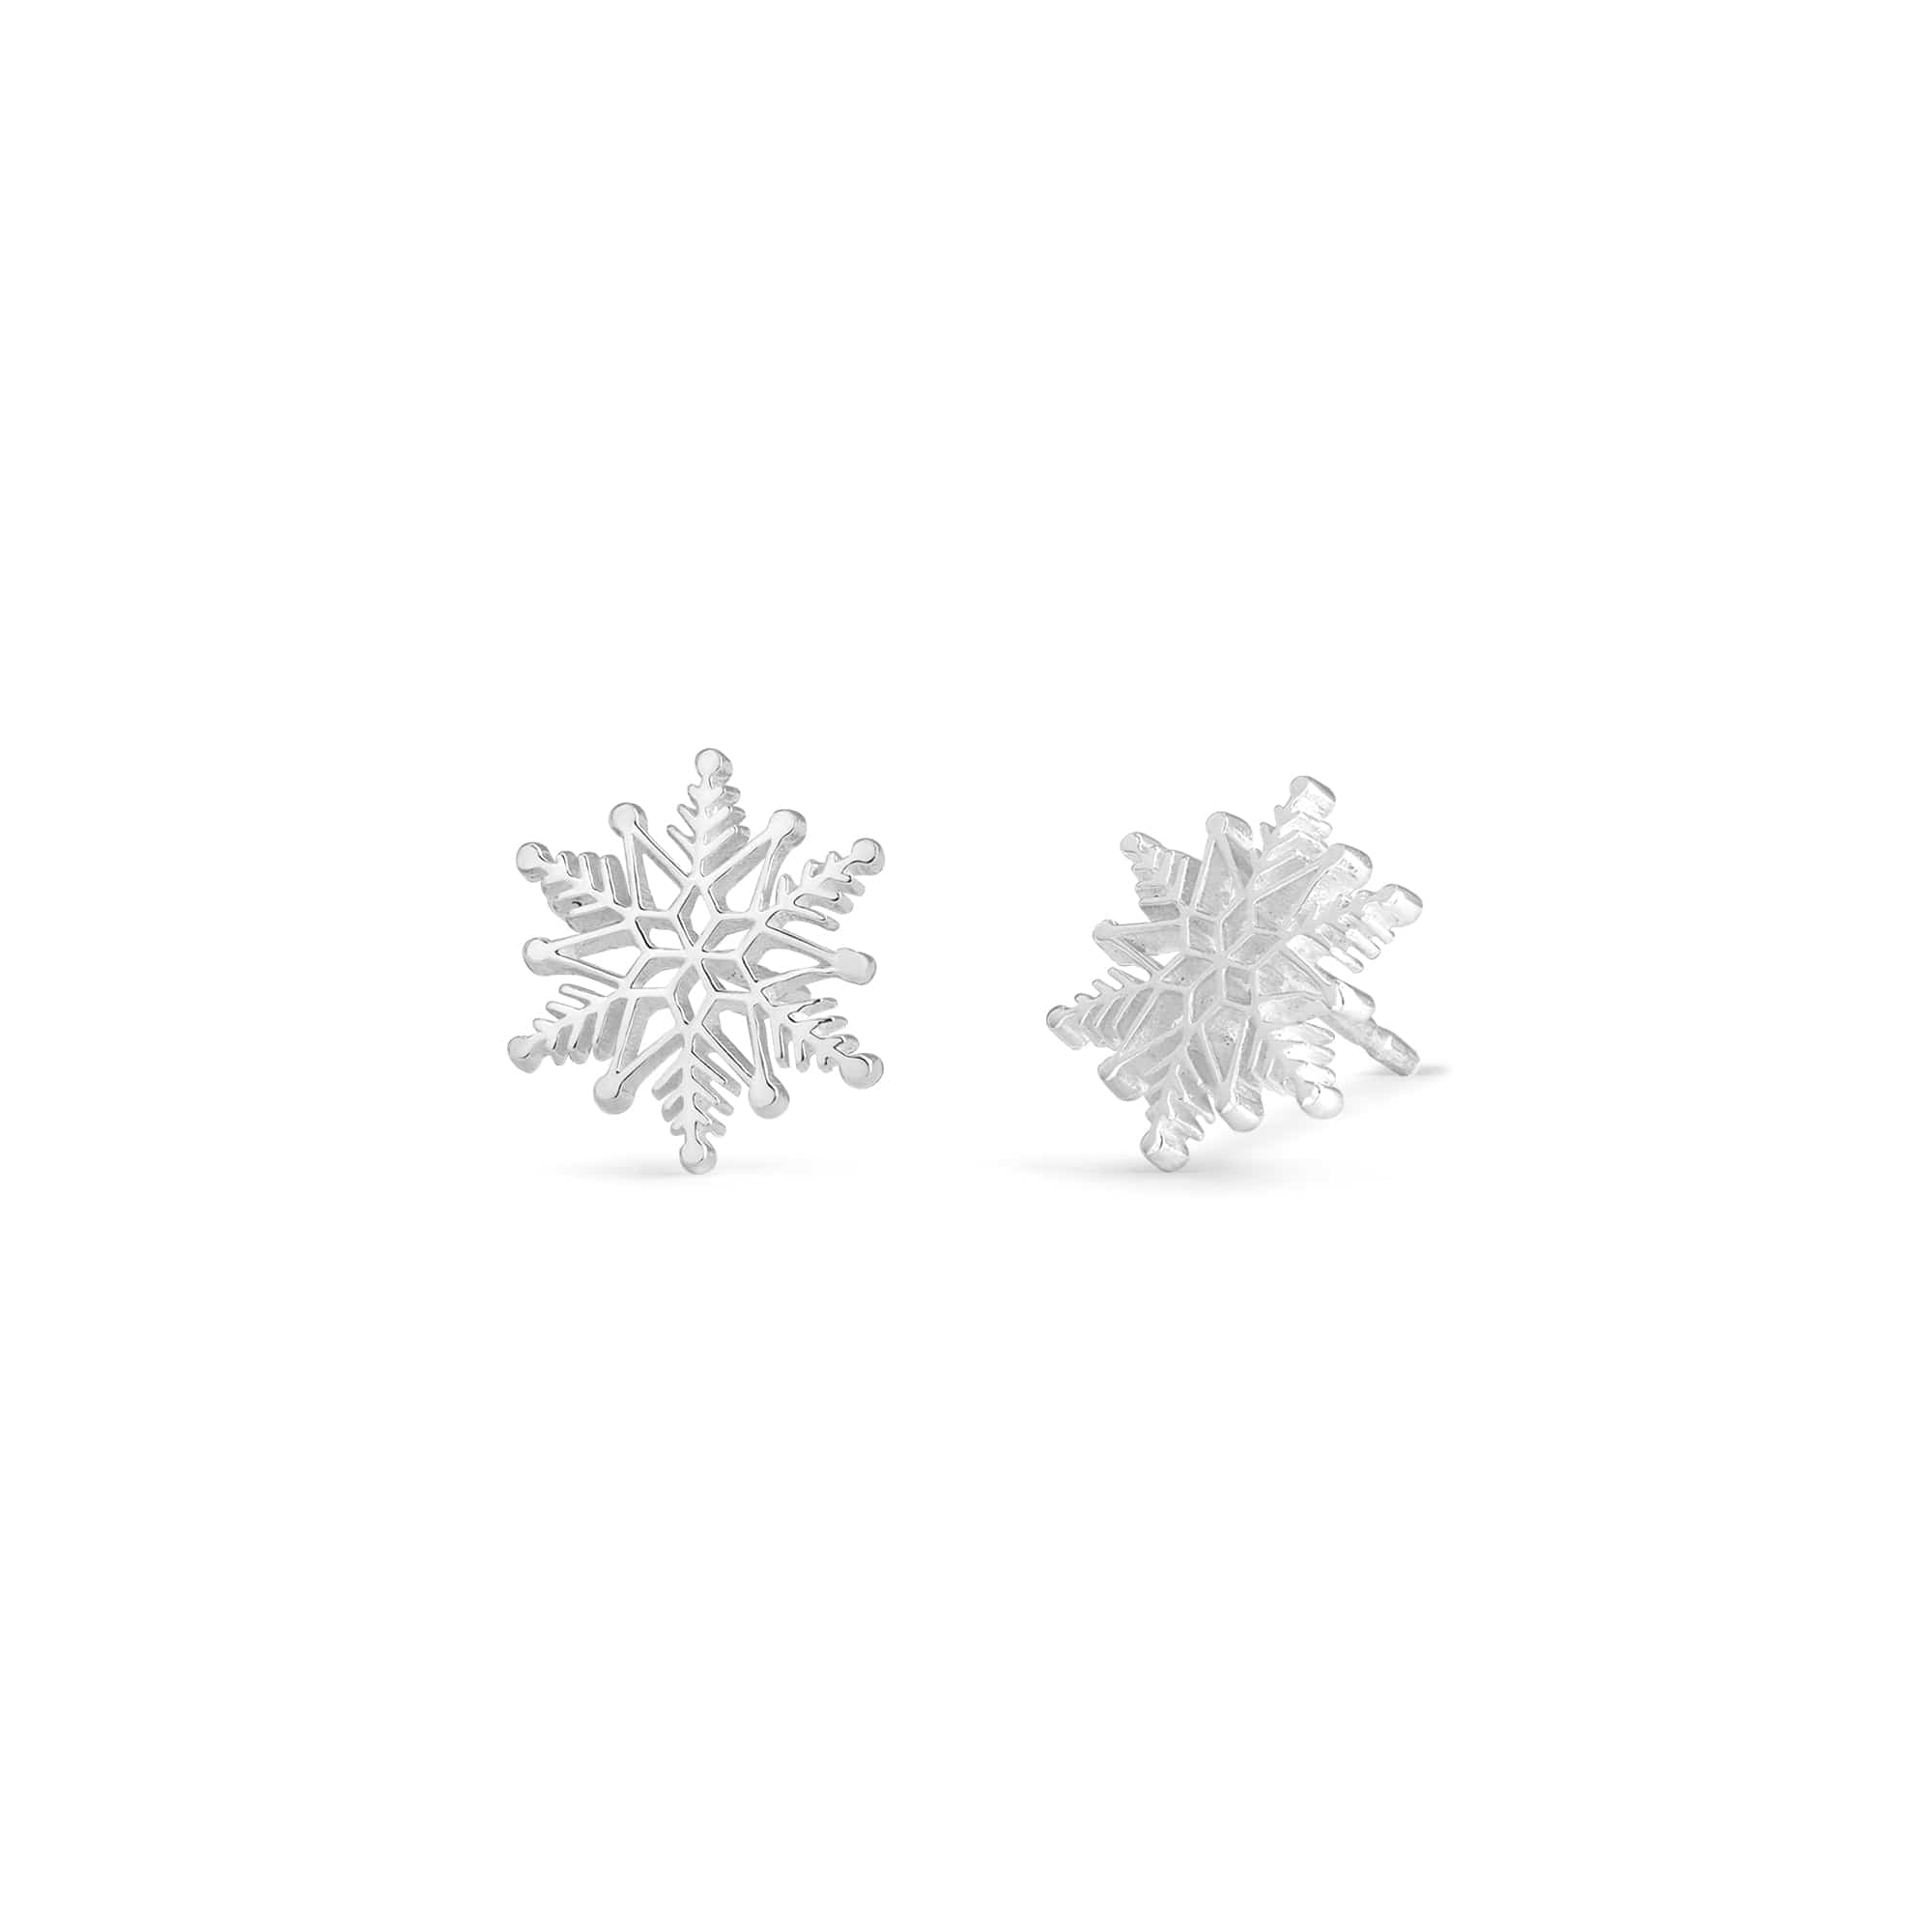 Boma Jewelry Earrings Snowflake Studs